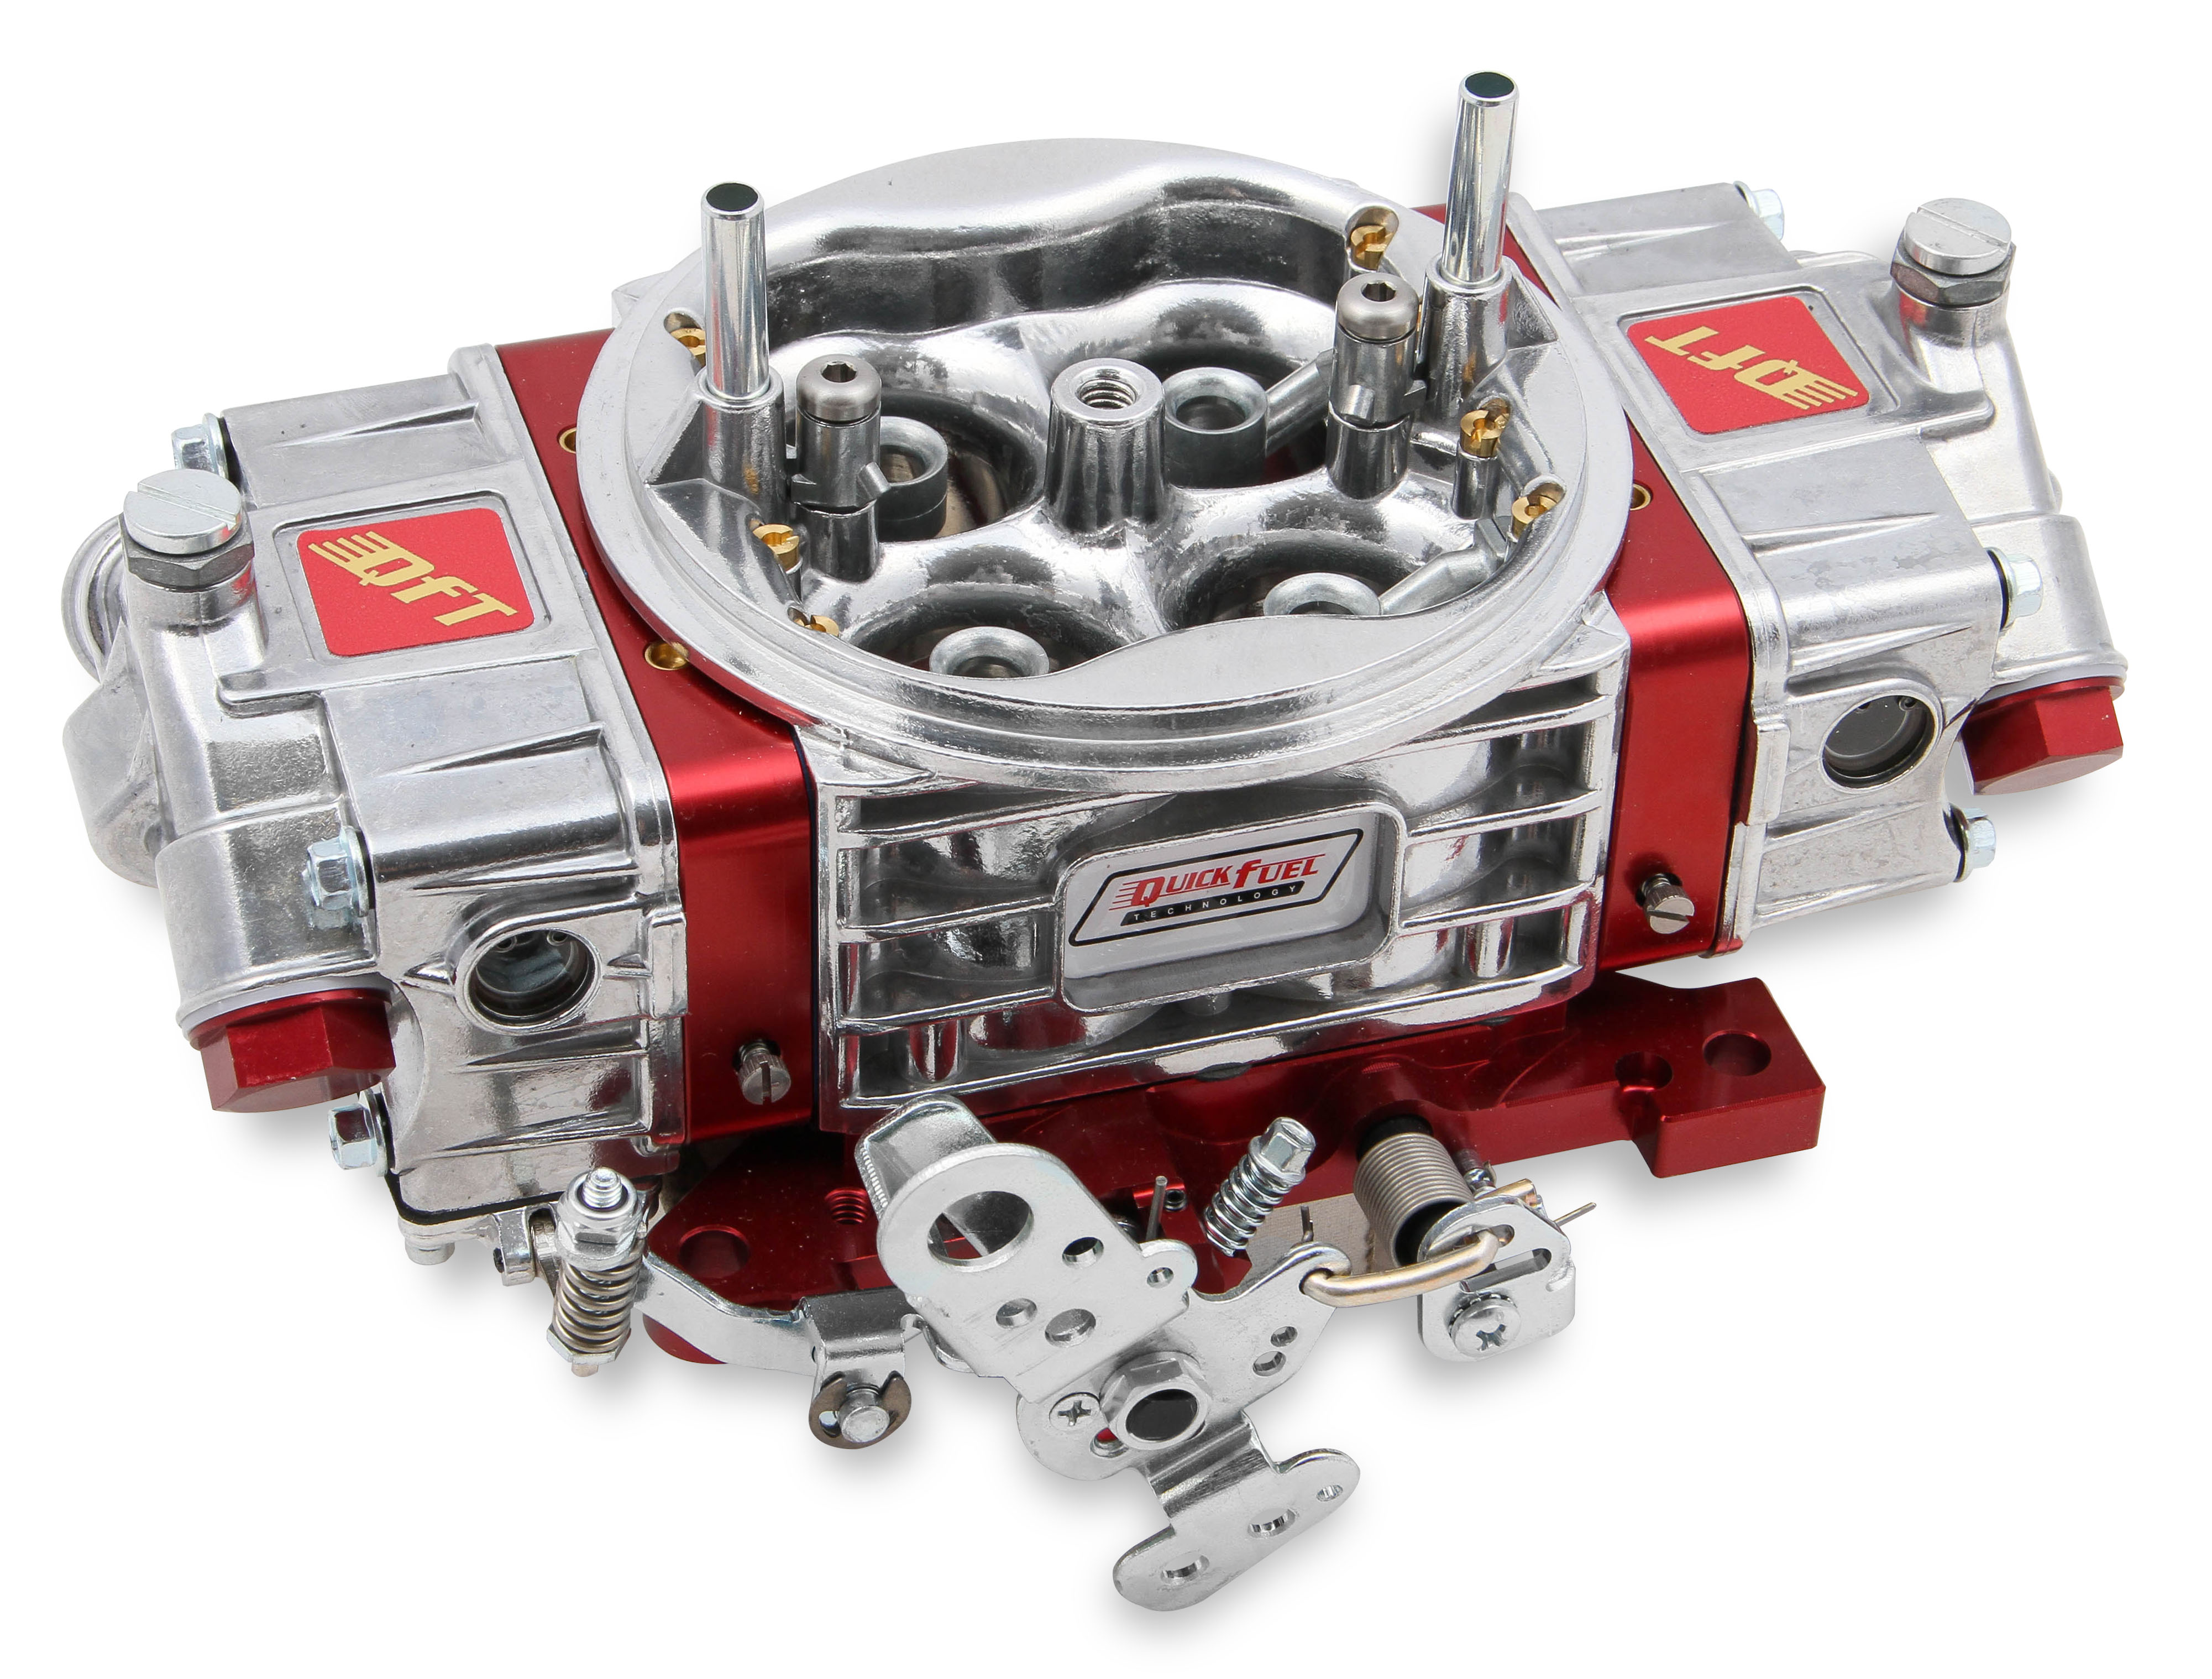 Quick Fuel Q-Series Carburetor 750 CFM Drag Race Q-750